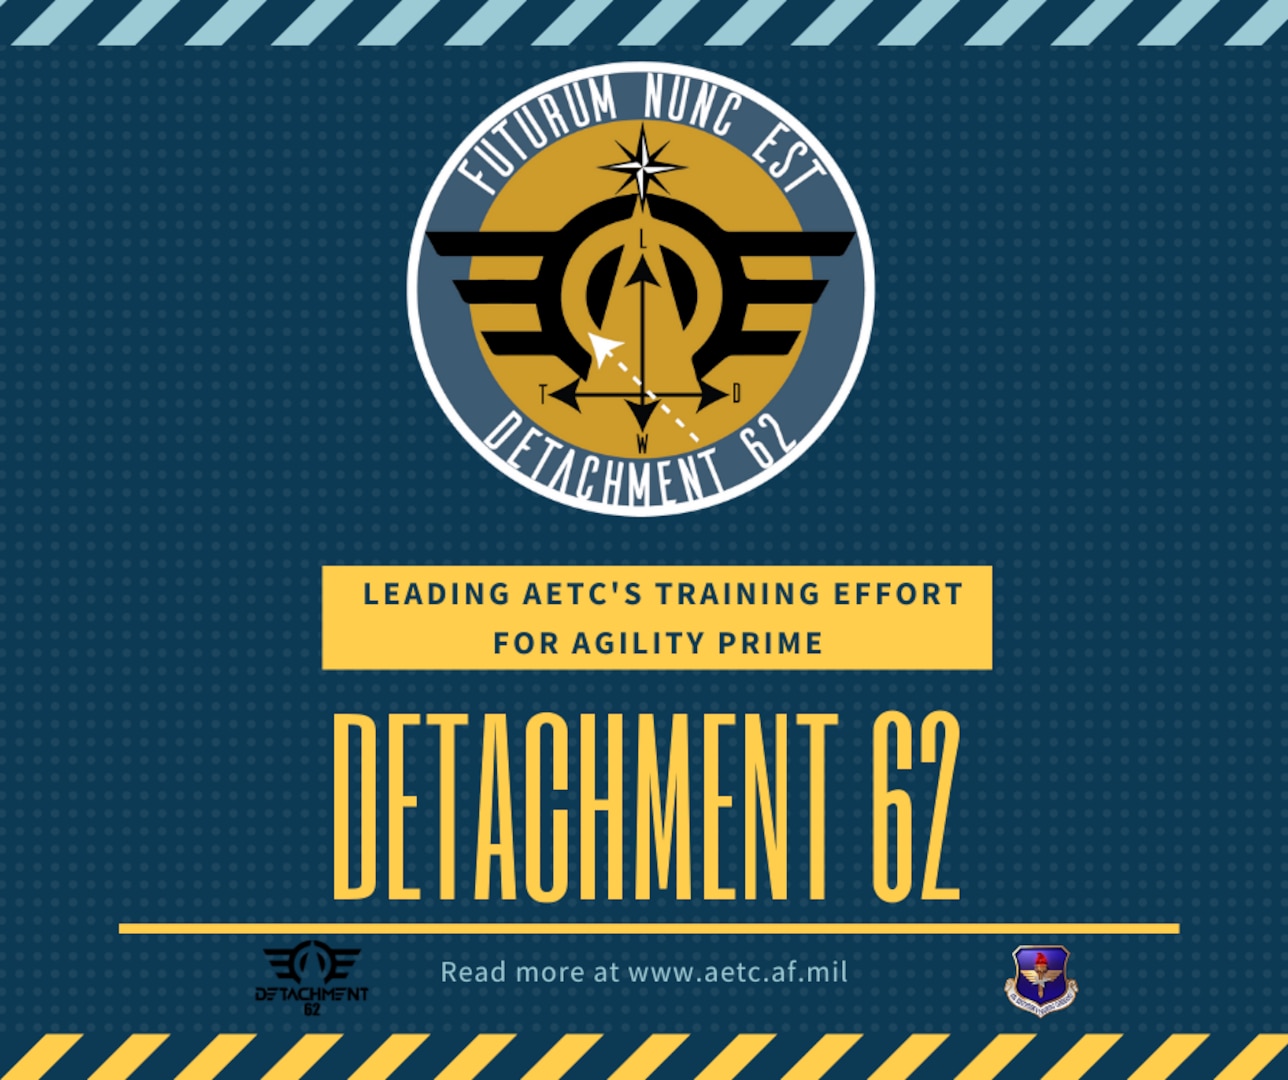 AETC’s Detachment 62 leading Agility Prime’s training effort